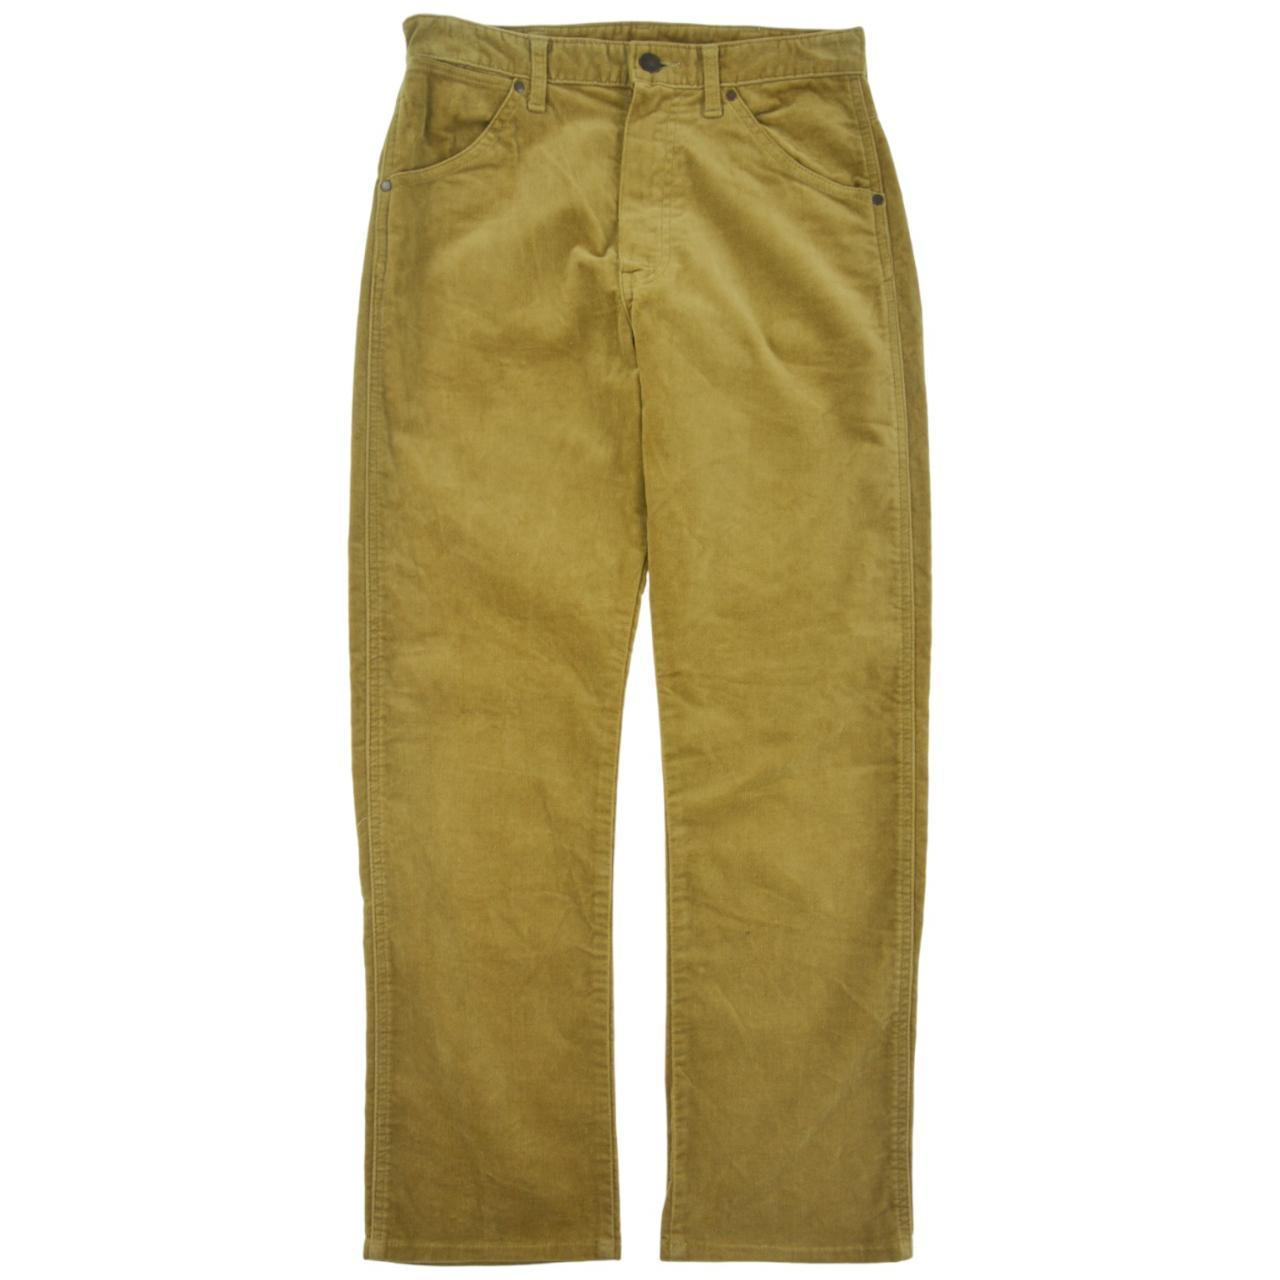 Vintage BAPE Velour Trousers Size W28 - Known Source